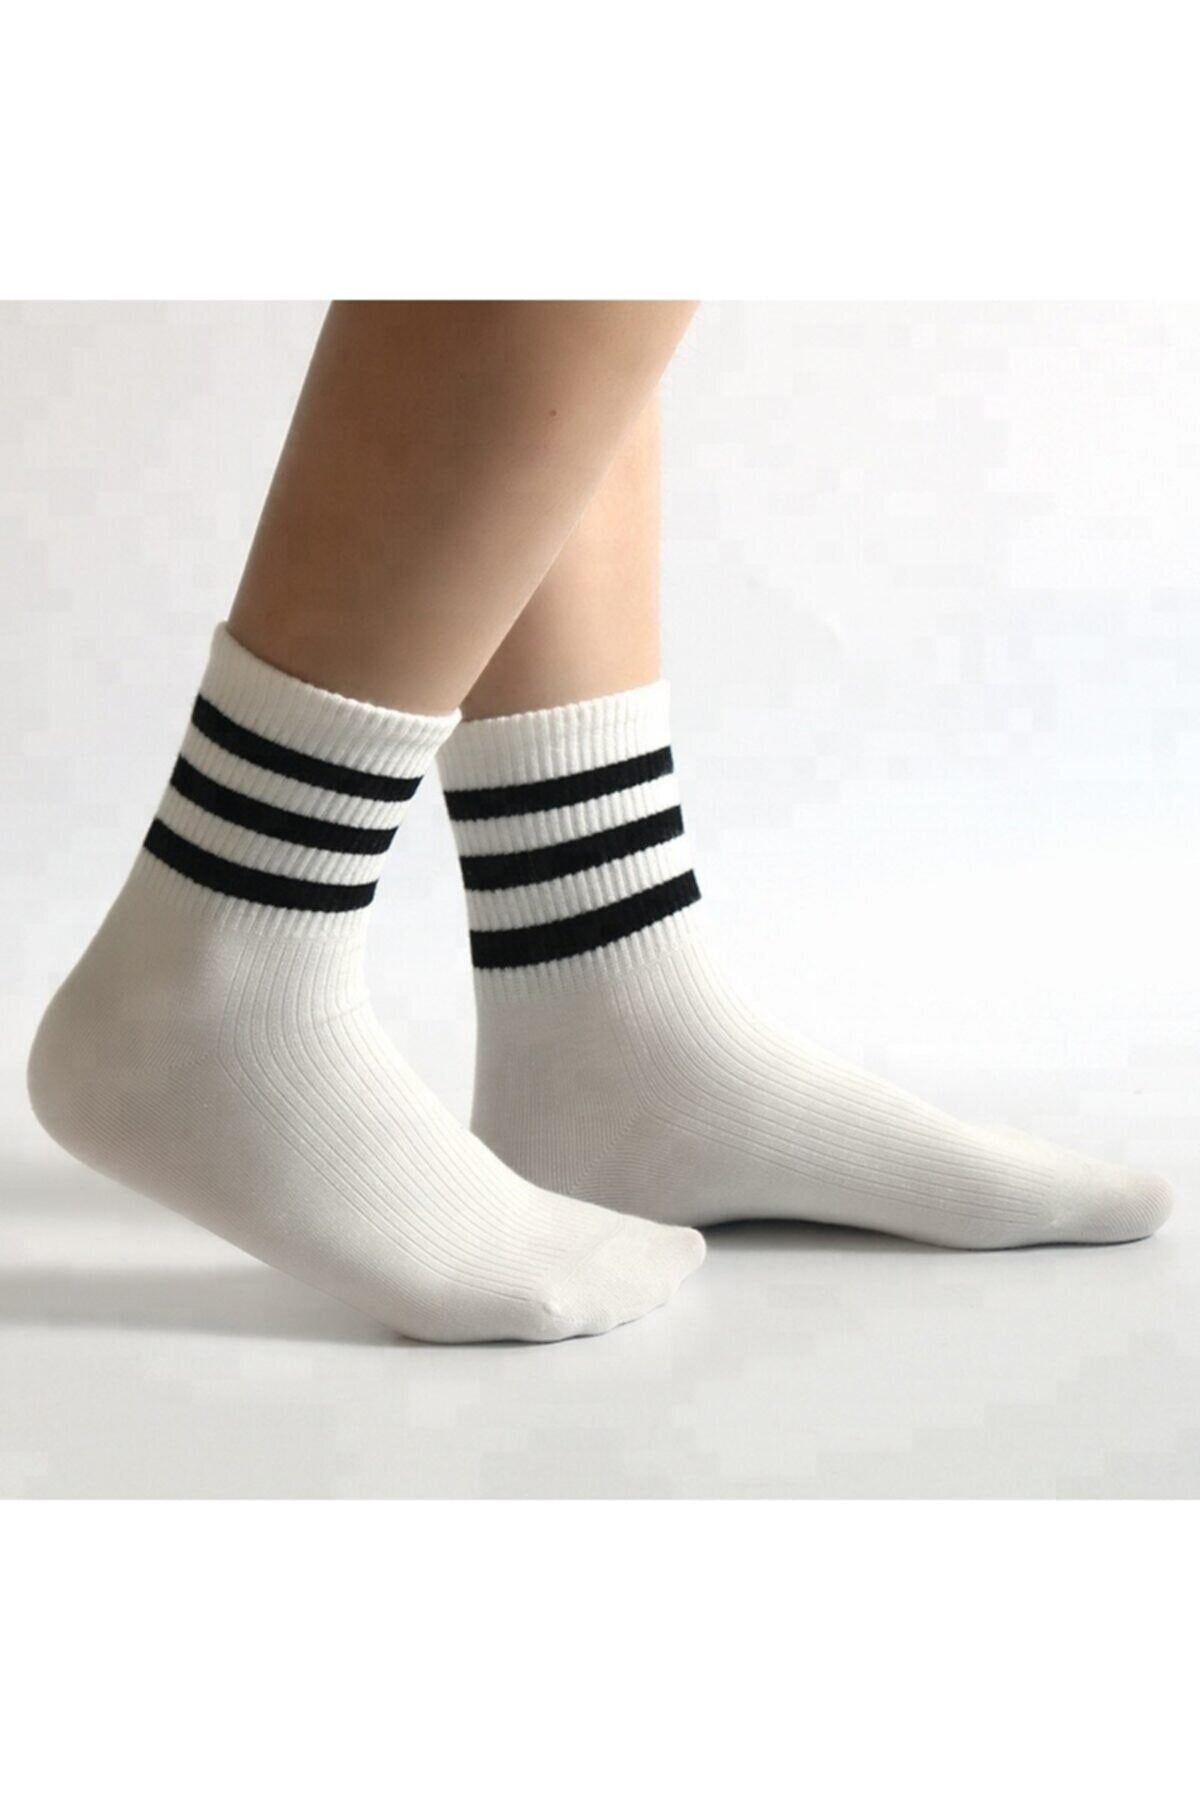 pazariz Patik Çorap 12 Adet